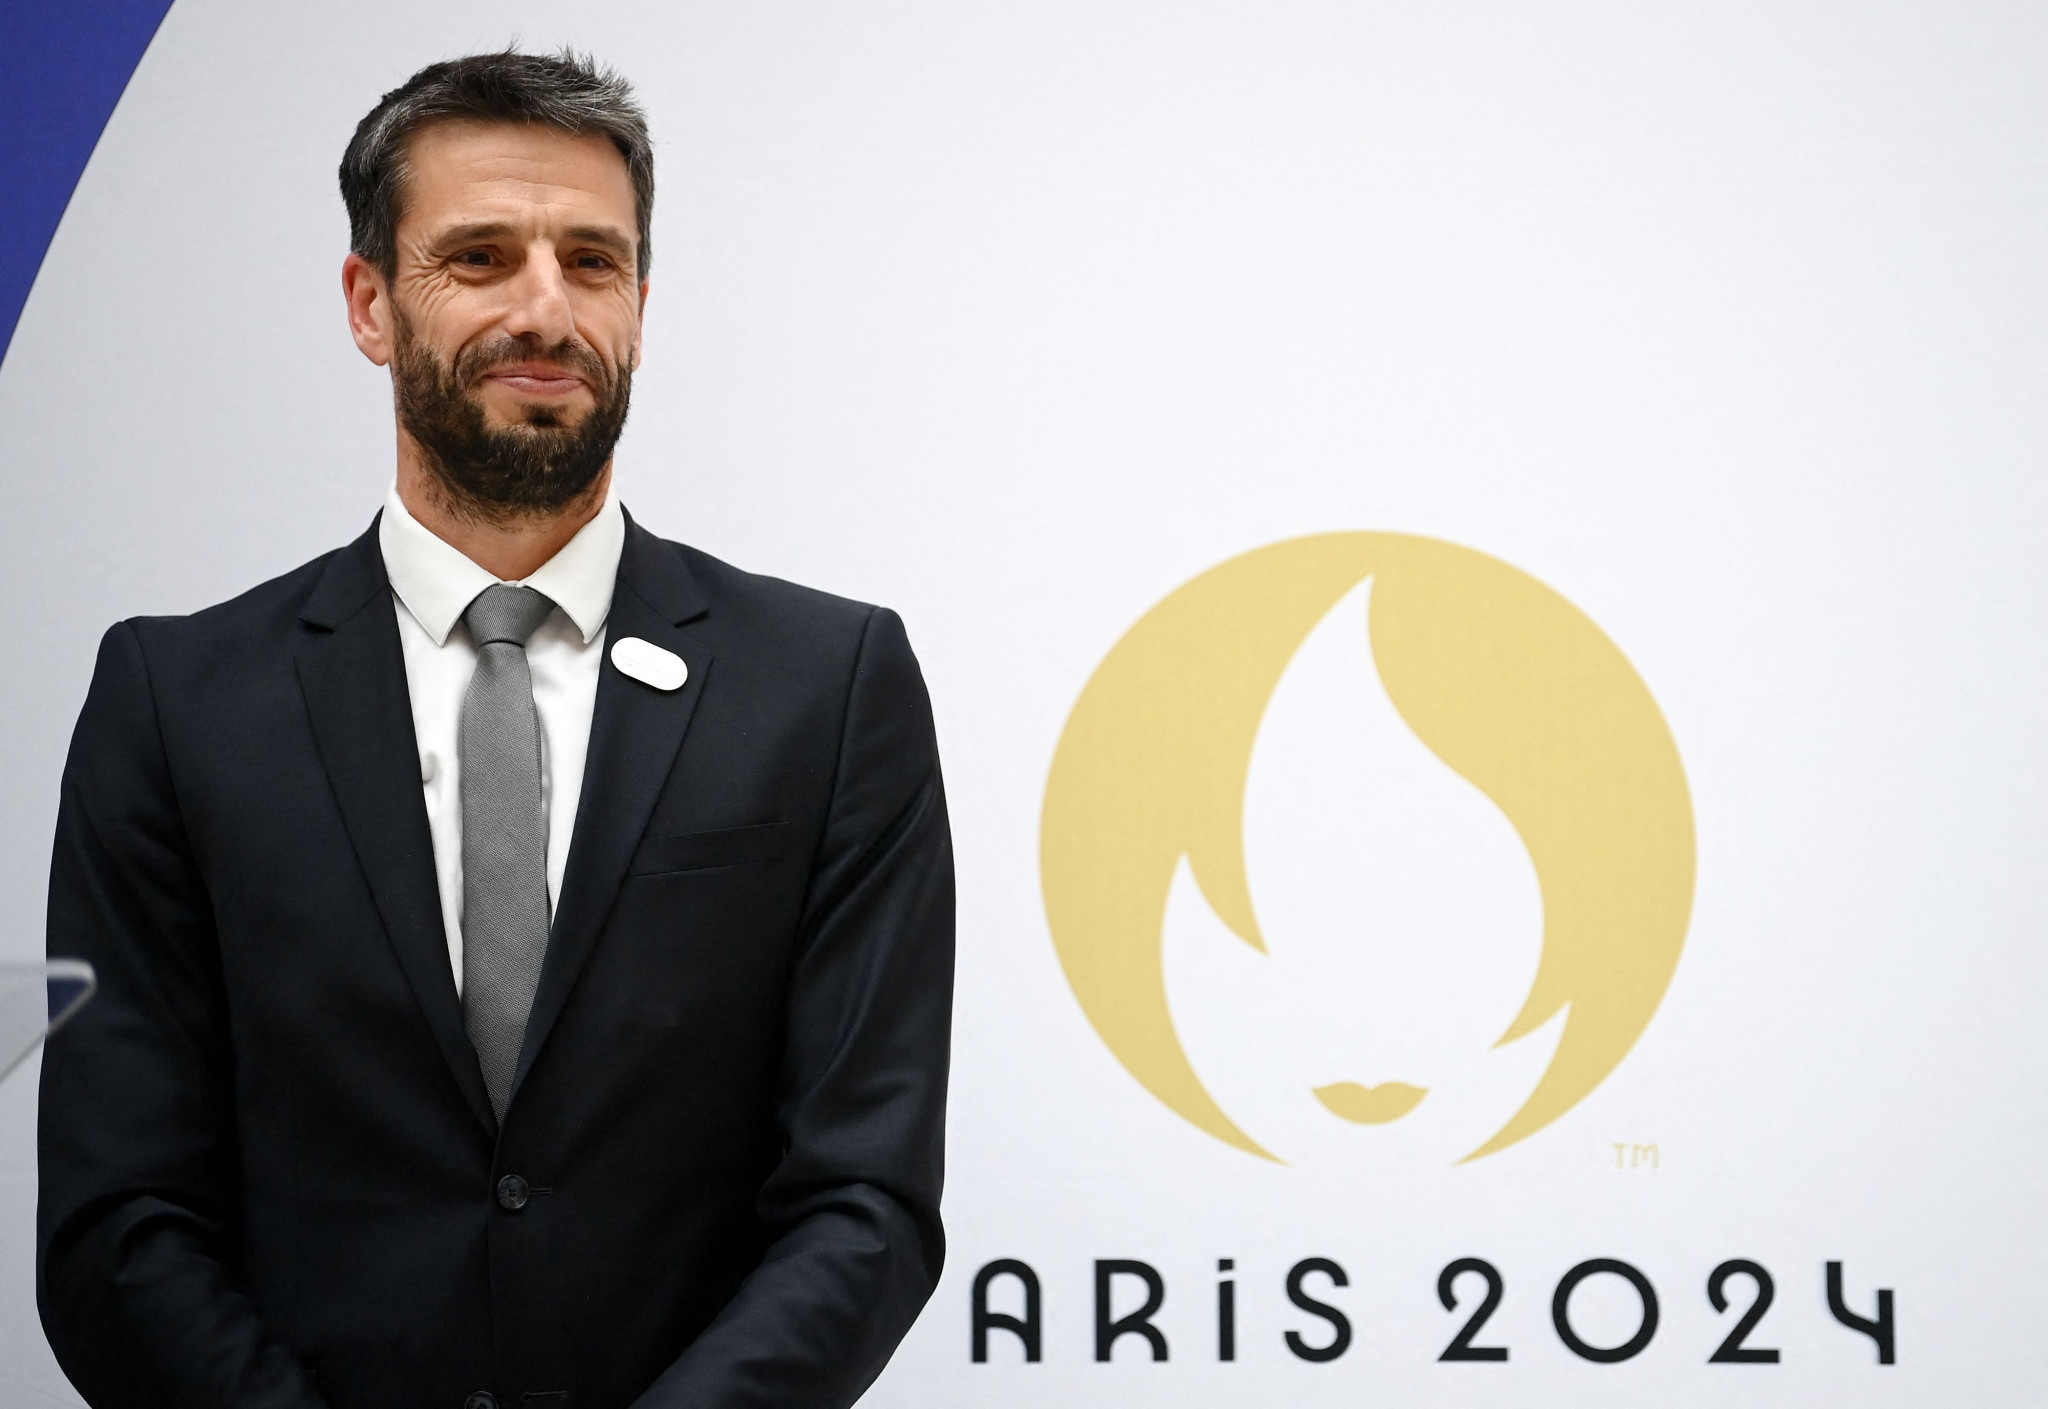 Exclusive: Paris 2024 President Estanguet aiming for "cool" Olympics with unique concept